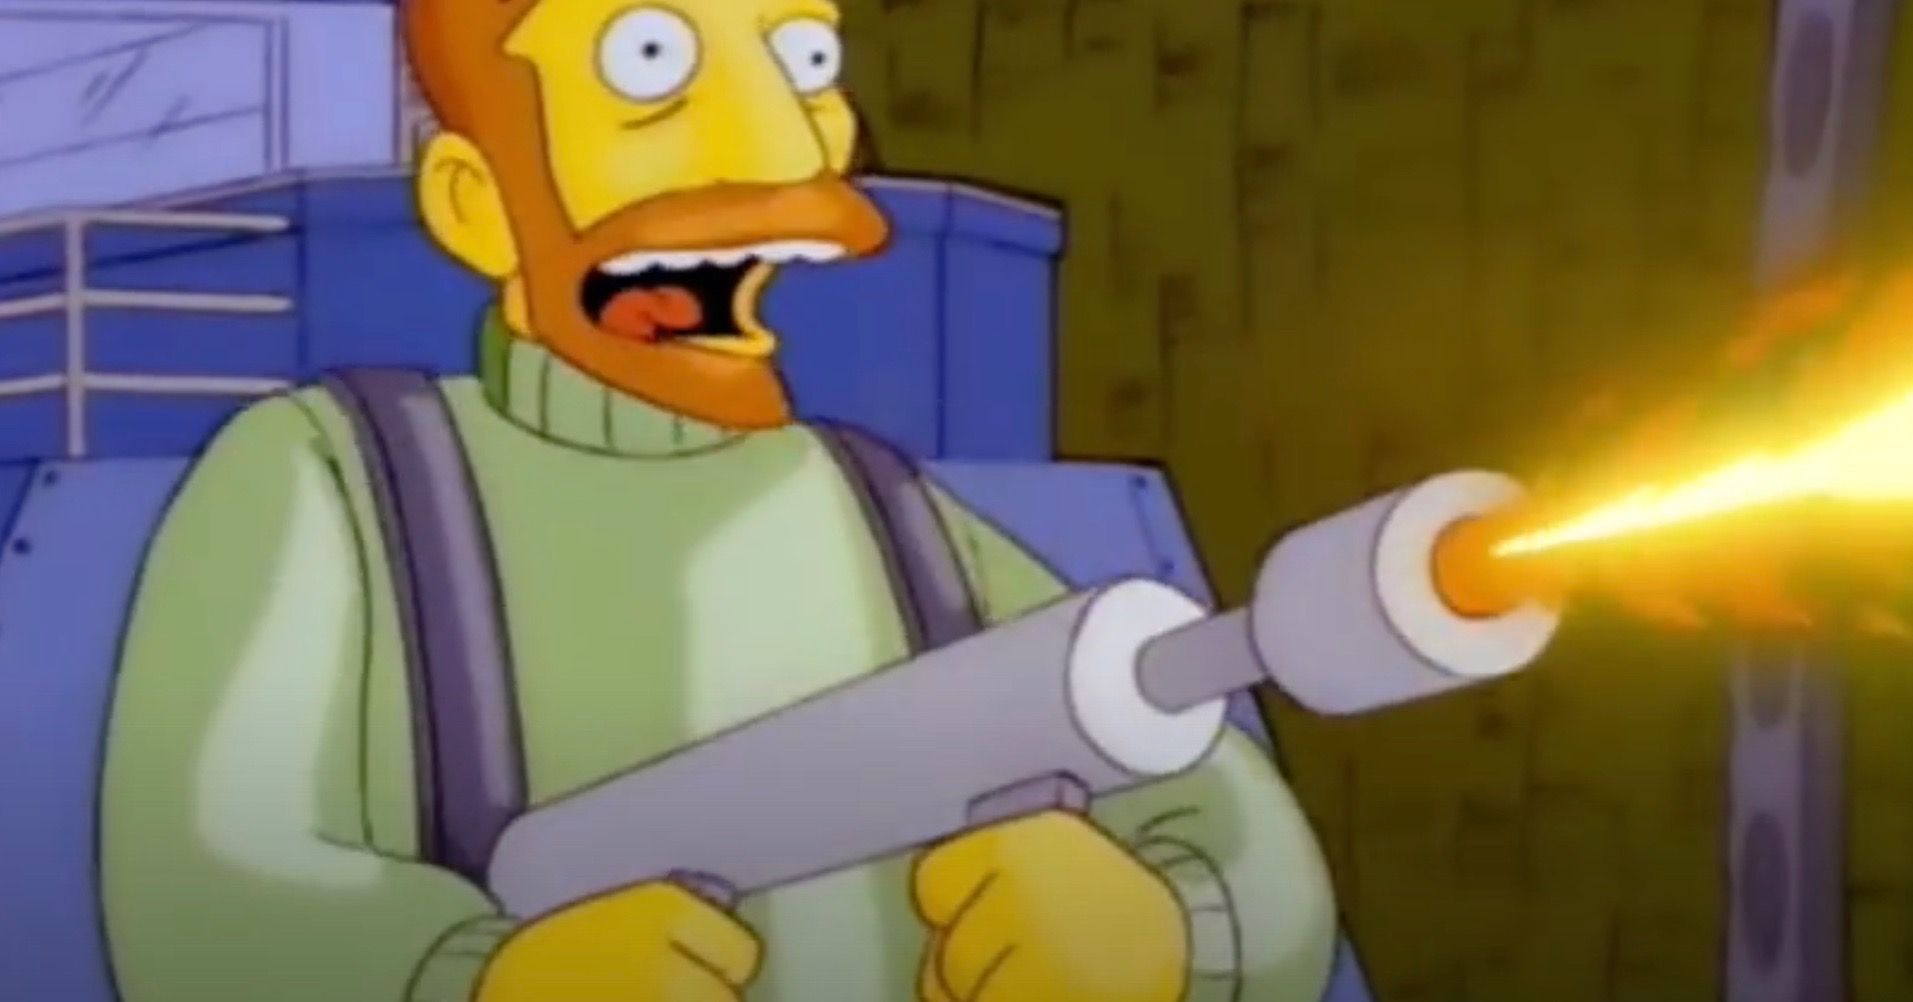 Hank Scorpio using a flamethrower in The Simpsons.